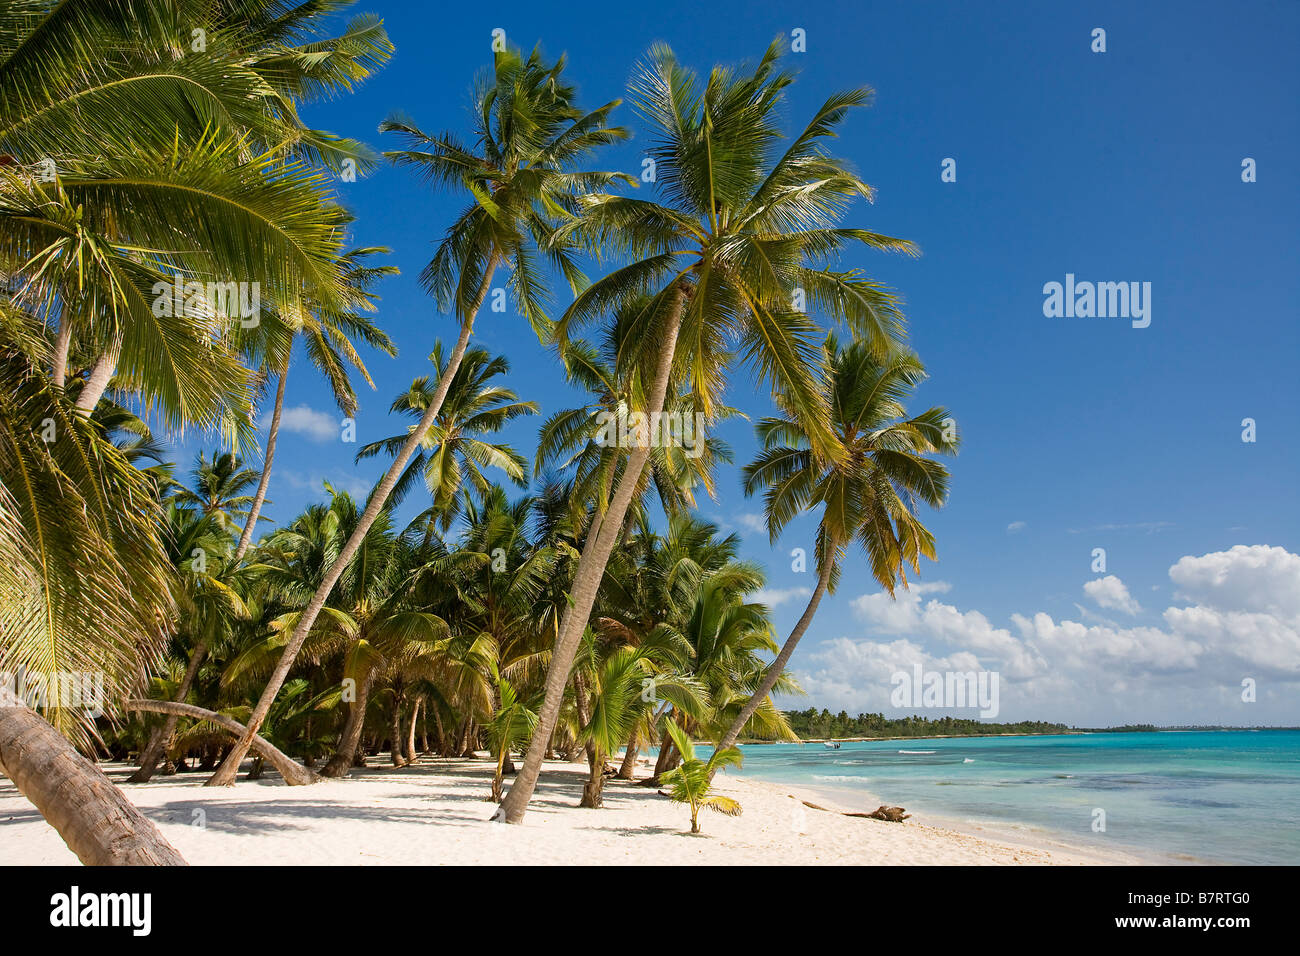 BEACH ON SAONA ISLAND PARQUE NATIONAL DEL ESTE DOMINICAN REPUBLIC CARIBBEAN Stock Photo